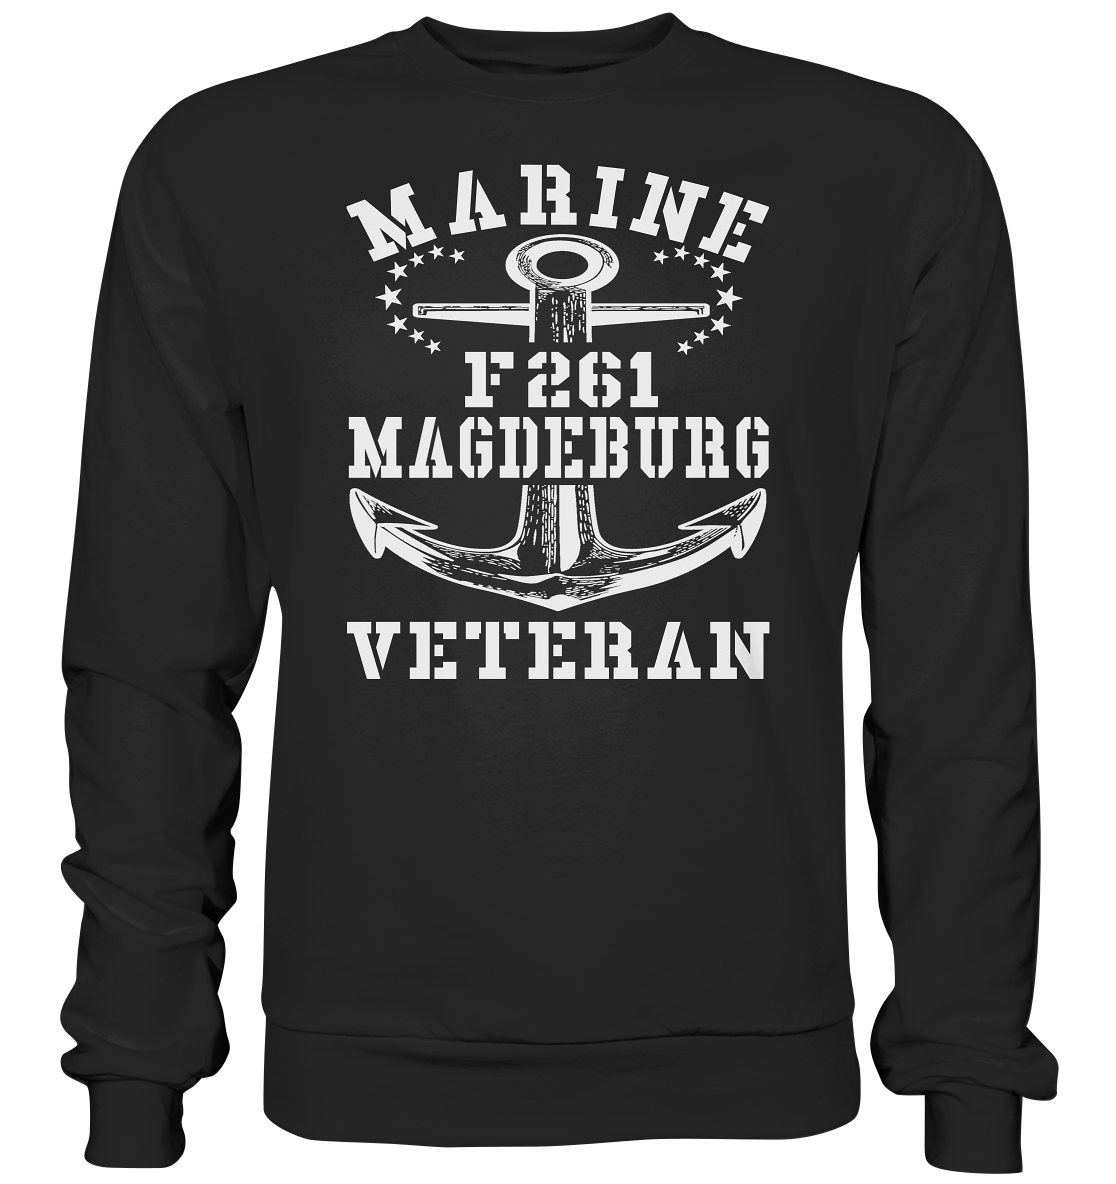 Korvette F261 MAGDEBURG Marine Veteran - Premium Sweatshirt